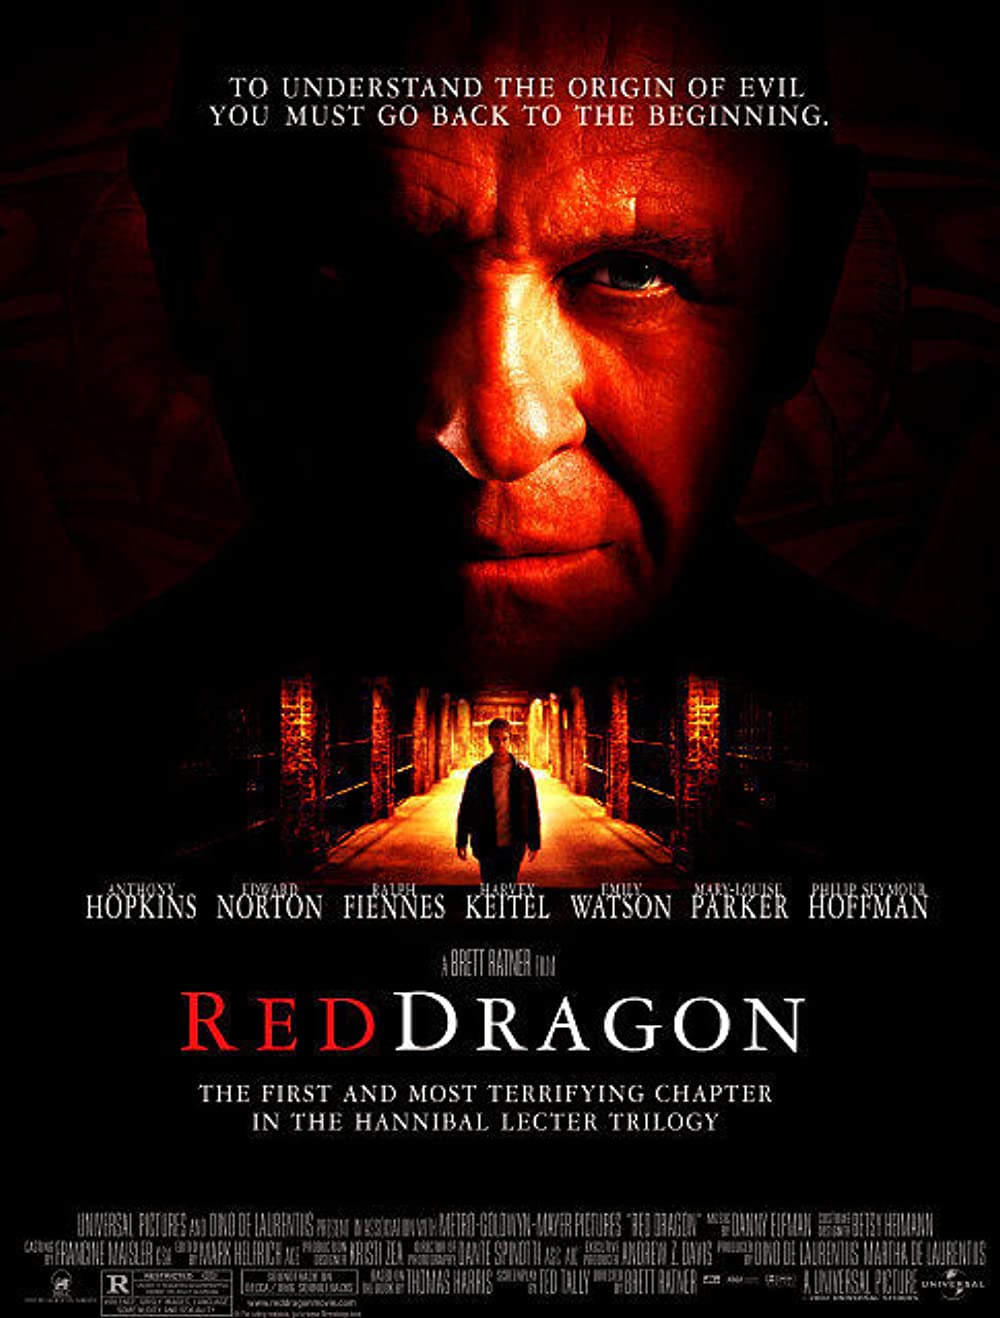 Stiahni si Filmy CZ/SK dabing Red Dragon / Cerveny drak (2002)(Remastered)(1080p)(BluRay)(EN/CZ) = CSFD 75%